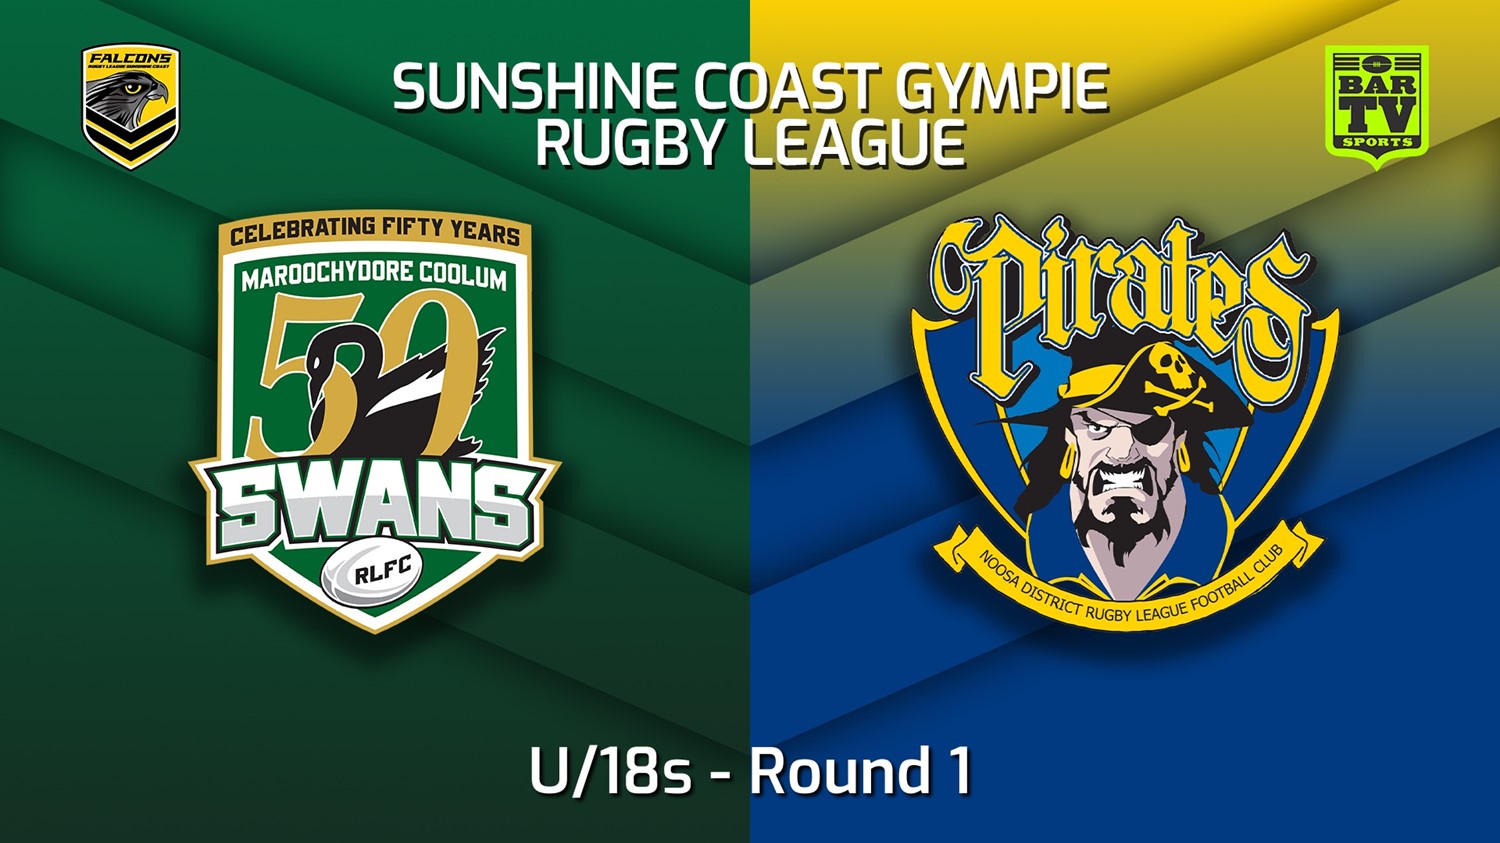 220403-2022 Sunshine Coast Gympie Rugby League Round 1 - U/18s - Maroochydore Swans v Noosa Pirates Minigame Slate Image